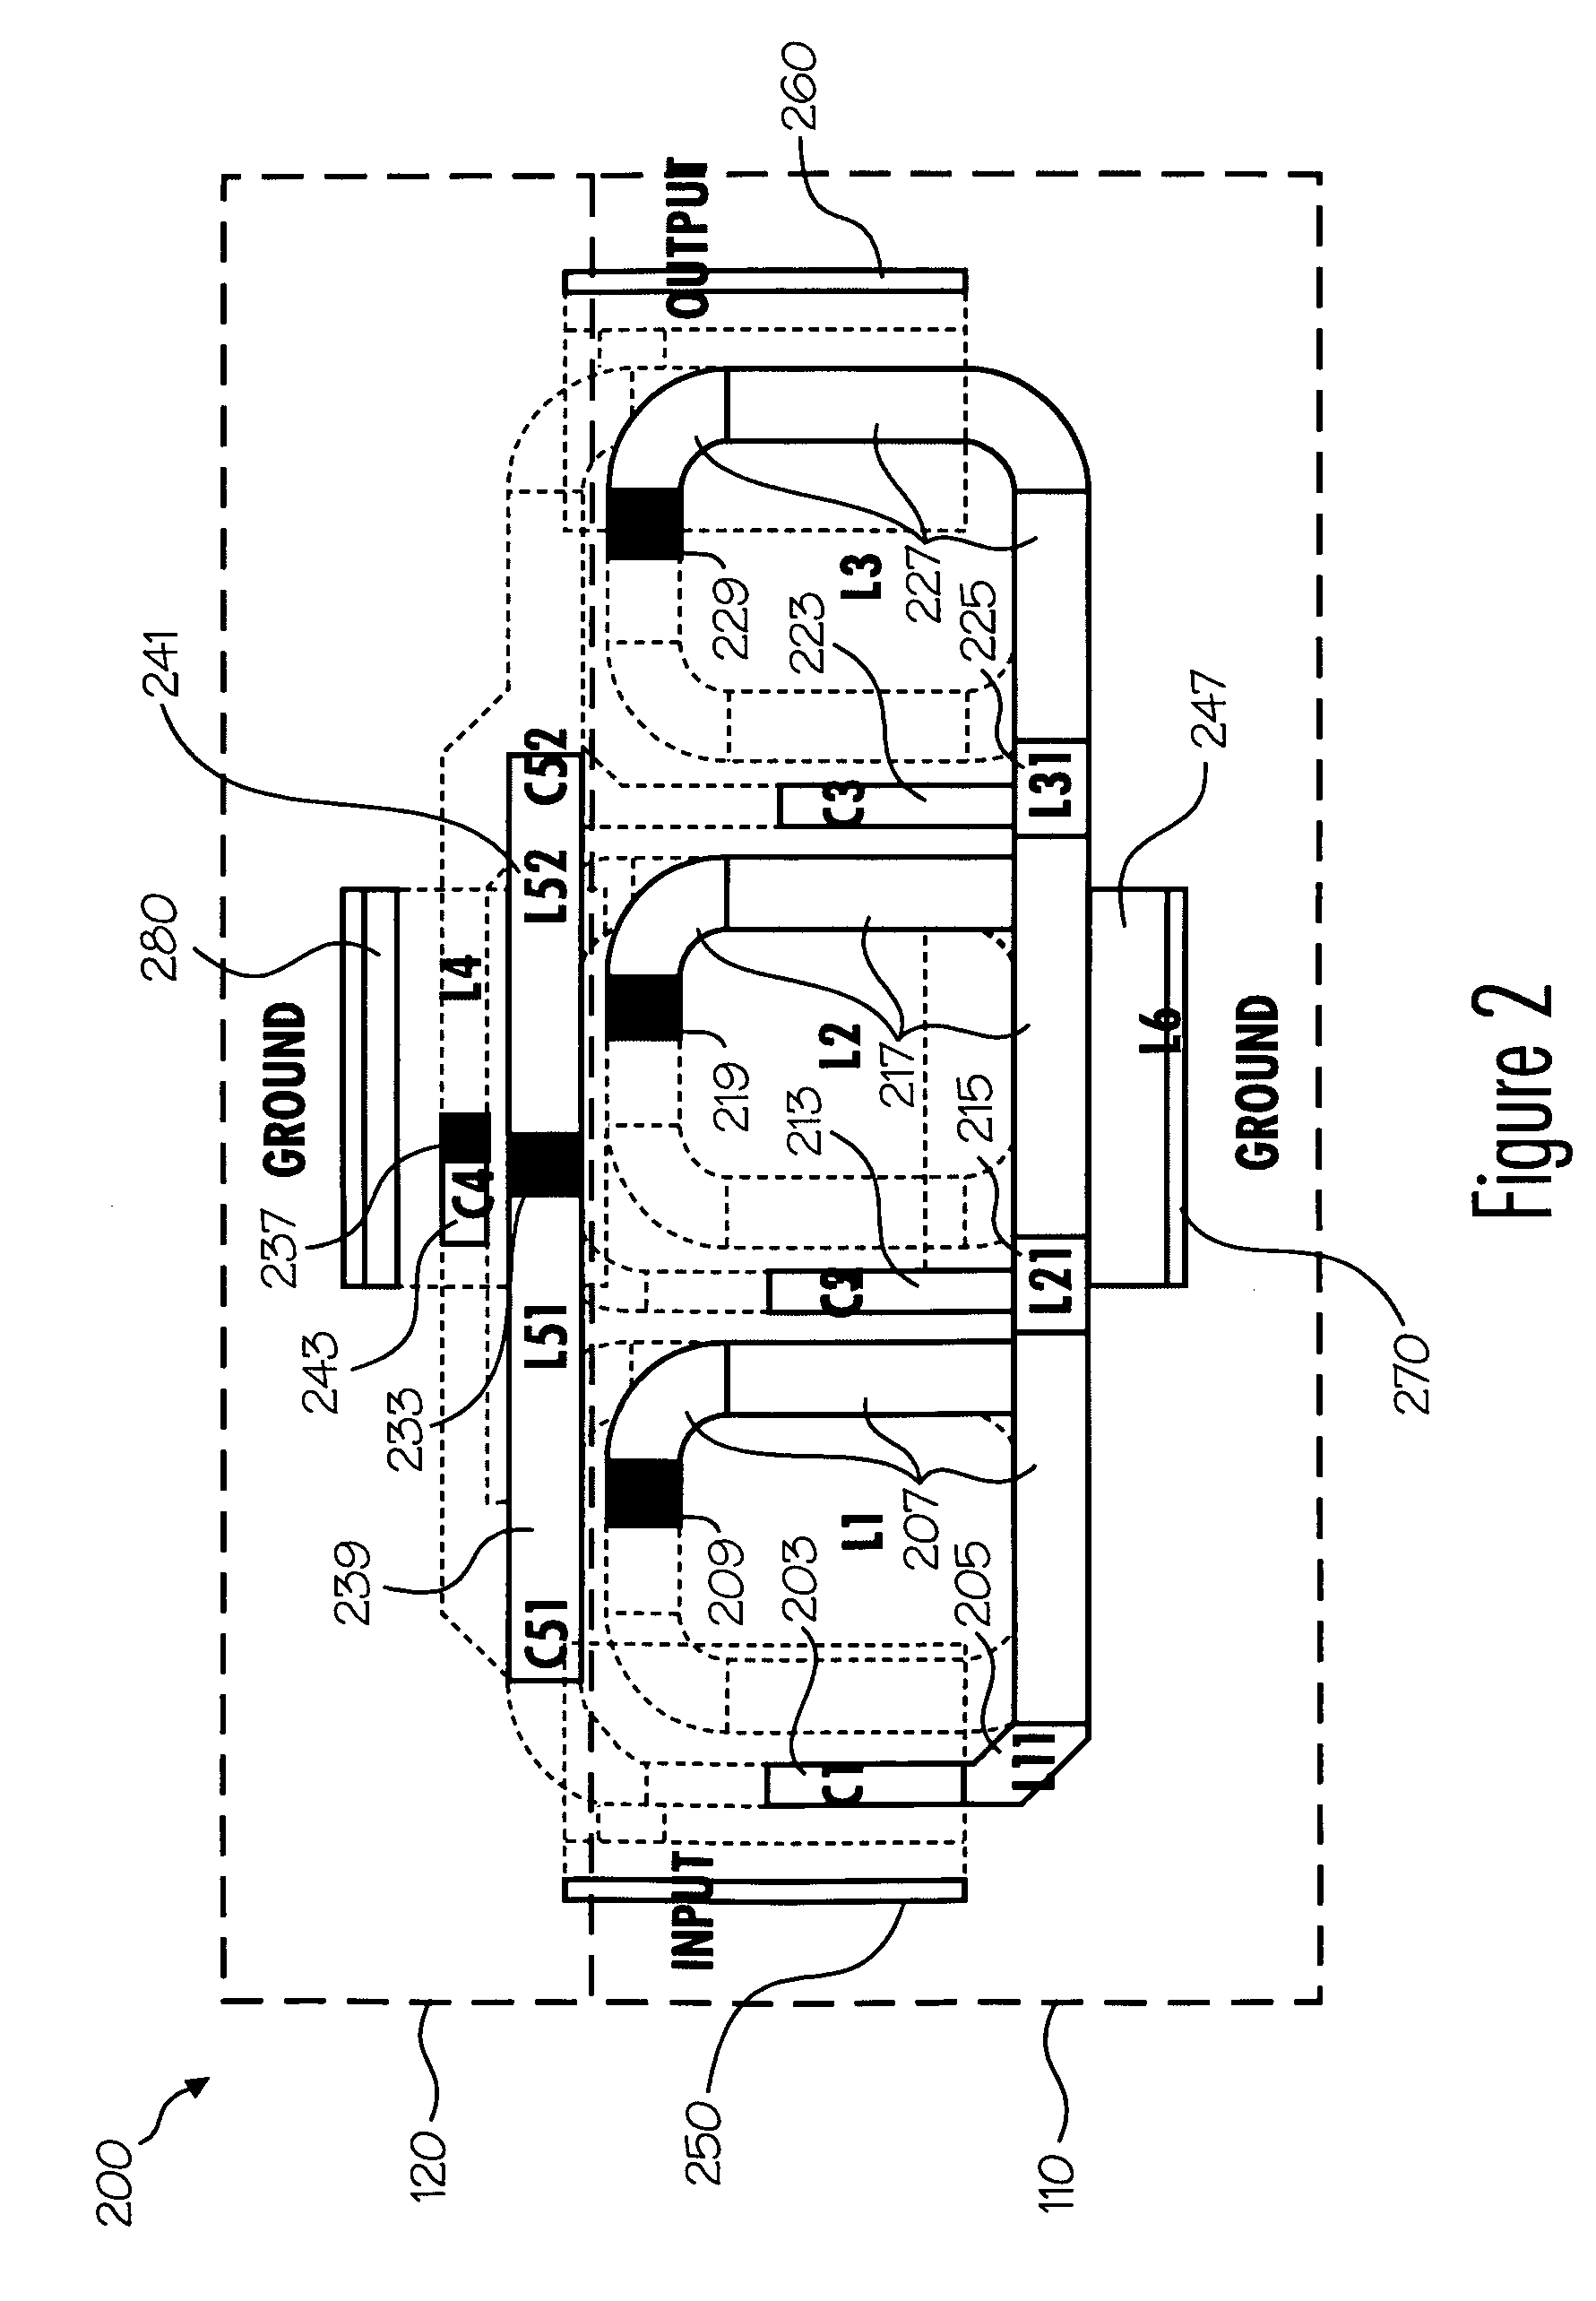 Thin-film bandpass filter using inductor-capacitor resonators